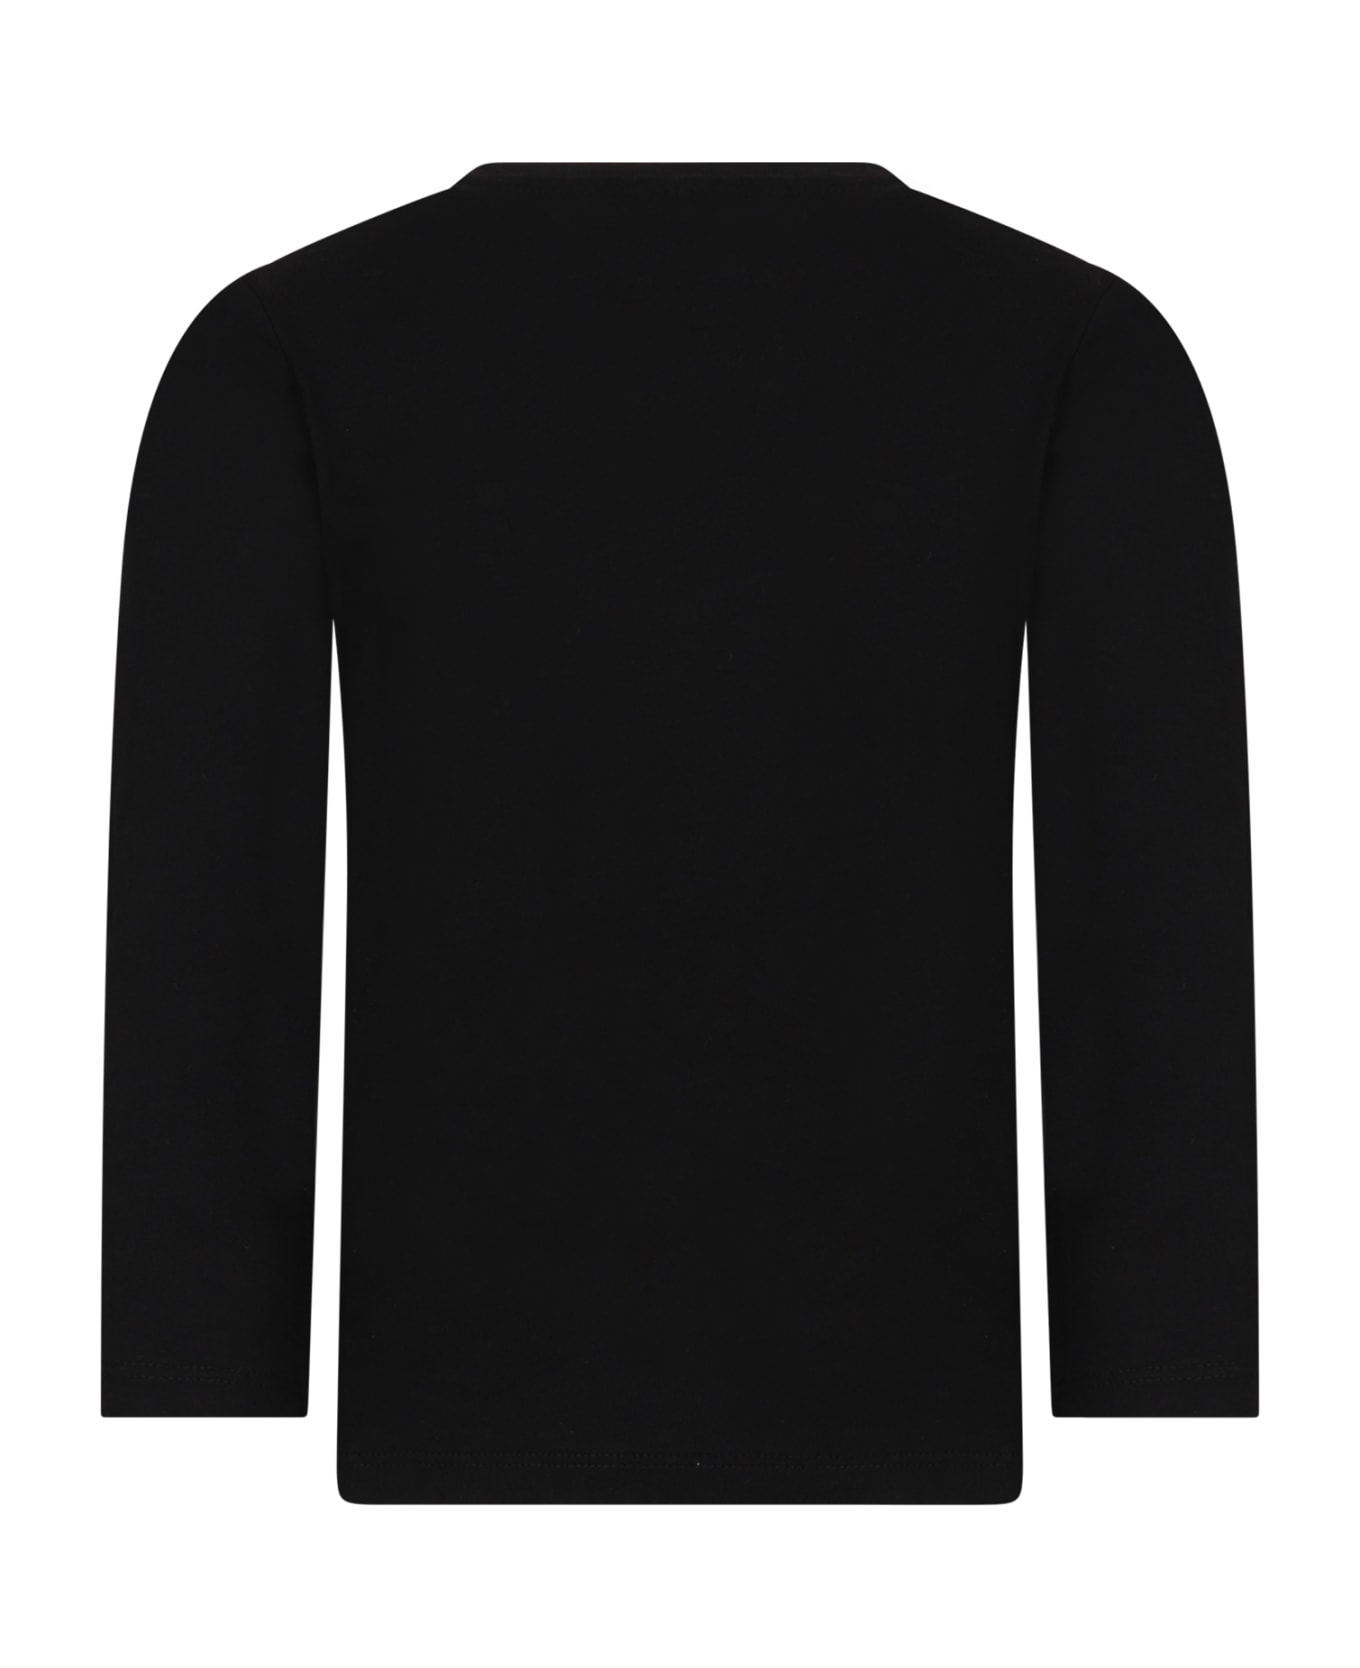 Stella McCartney Kids Black T-shirt For Boy With Print And Logo - Black